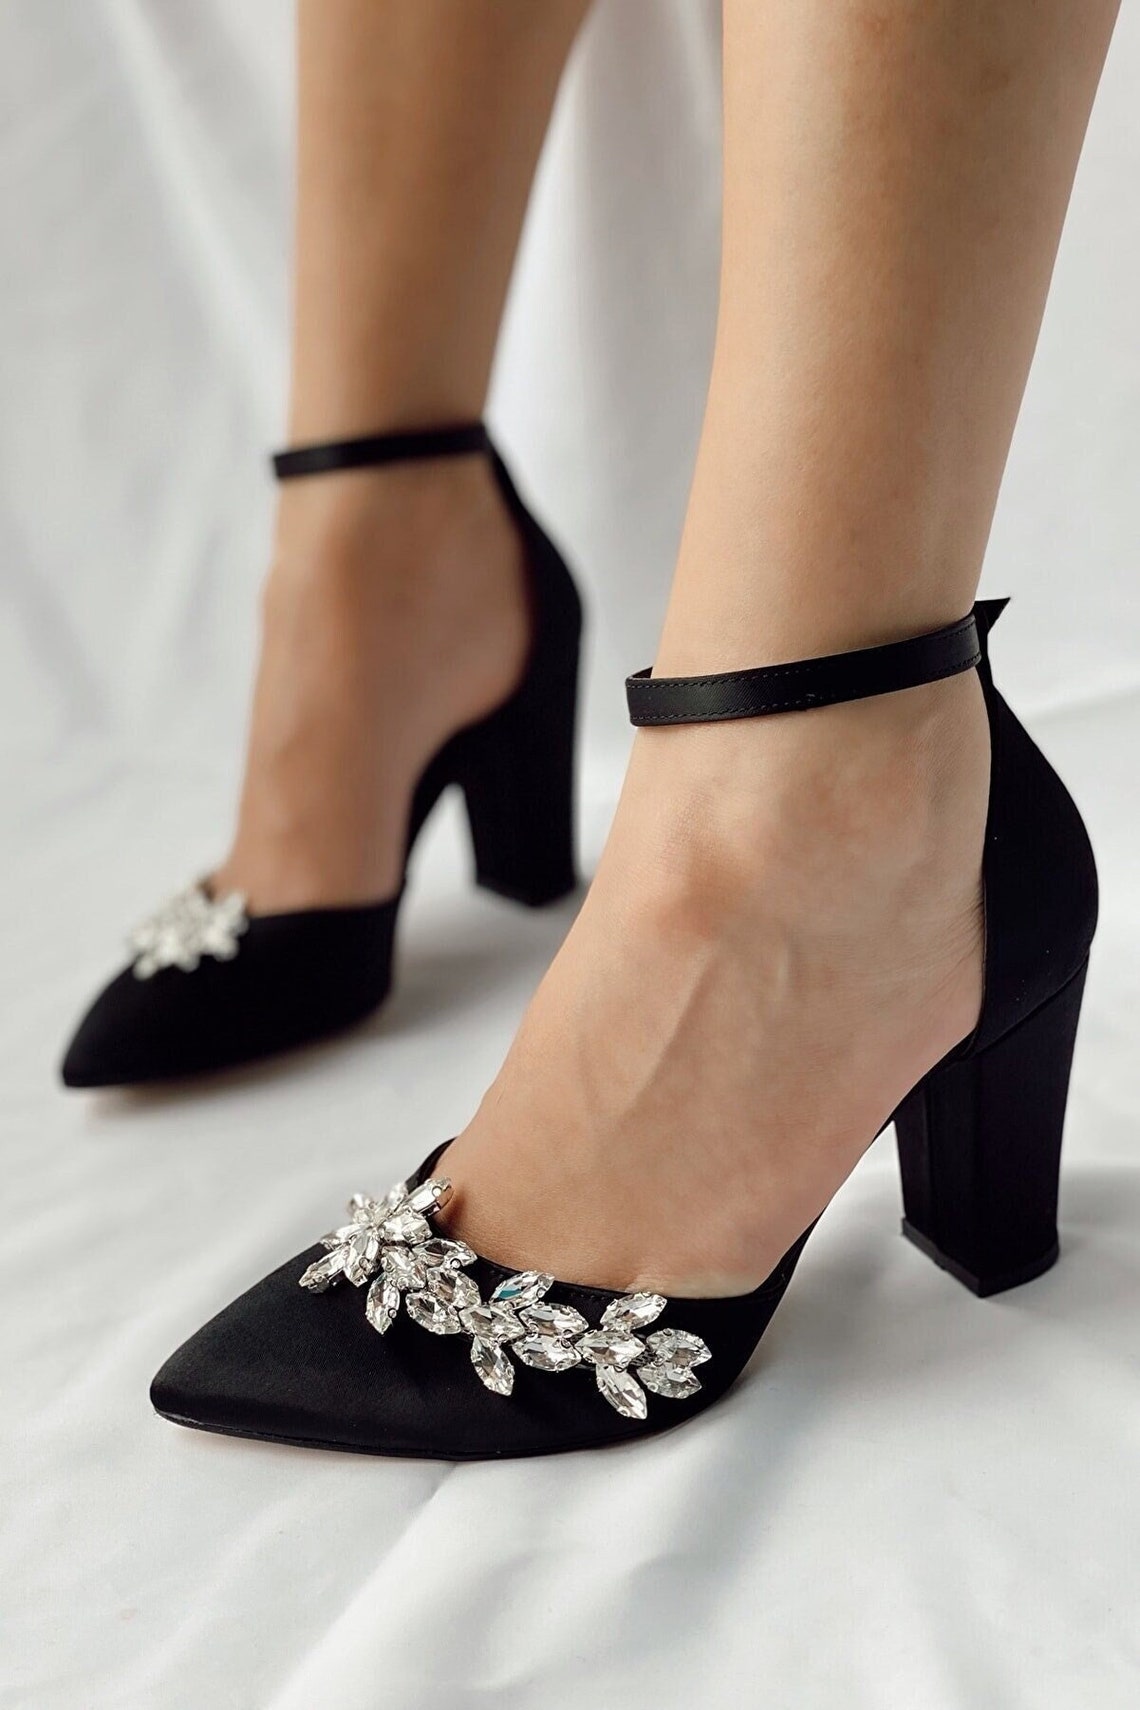 Black Block Heels Black Heels Wedding Shoes Shoes For image 1